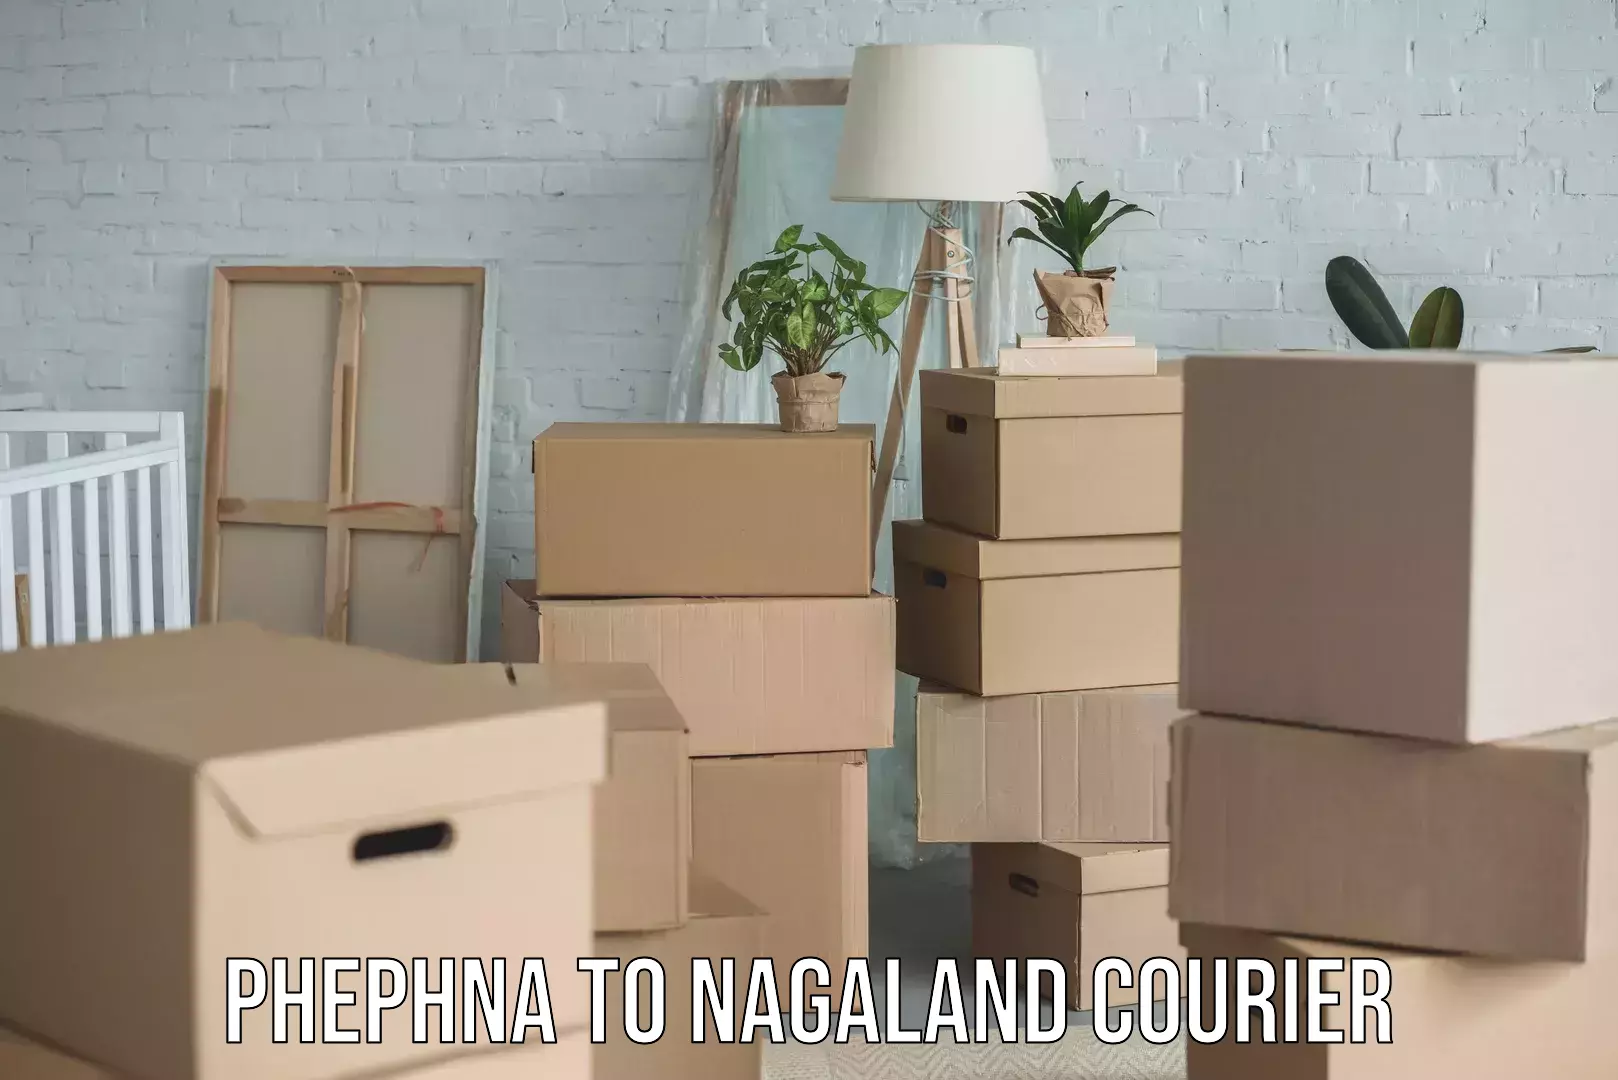 Skilled furniture transporters Phephna to Nagaland